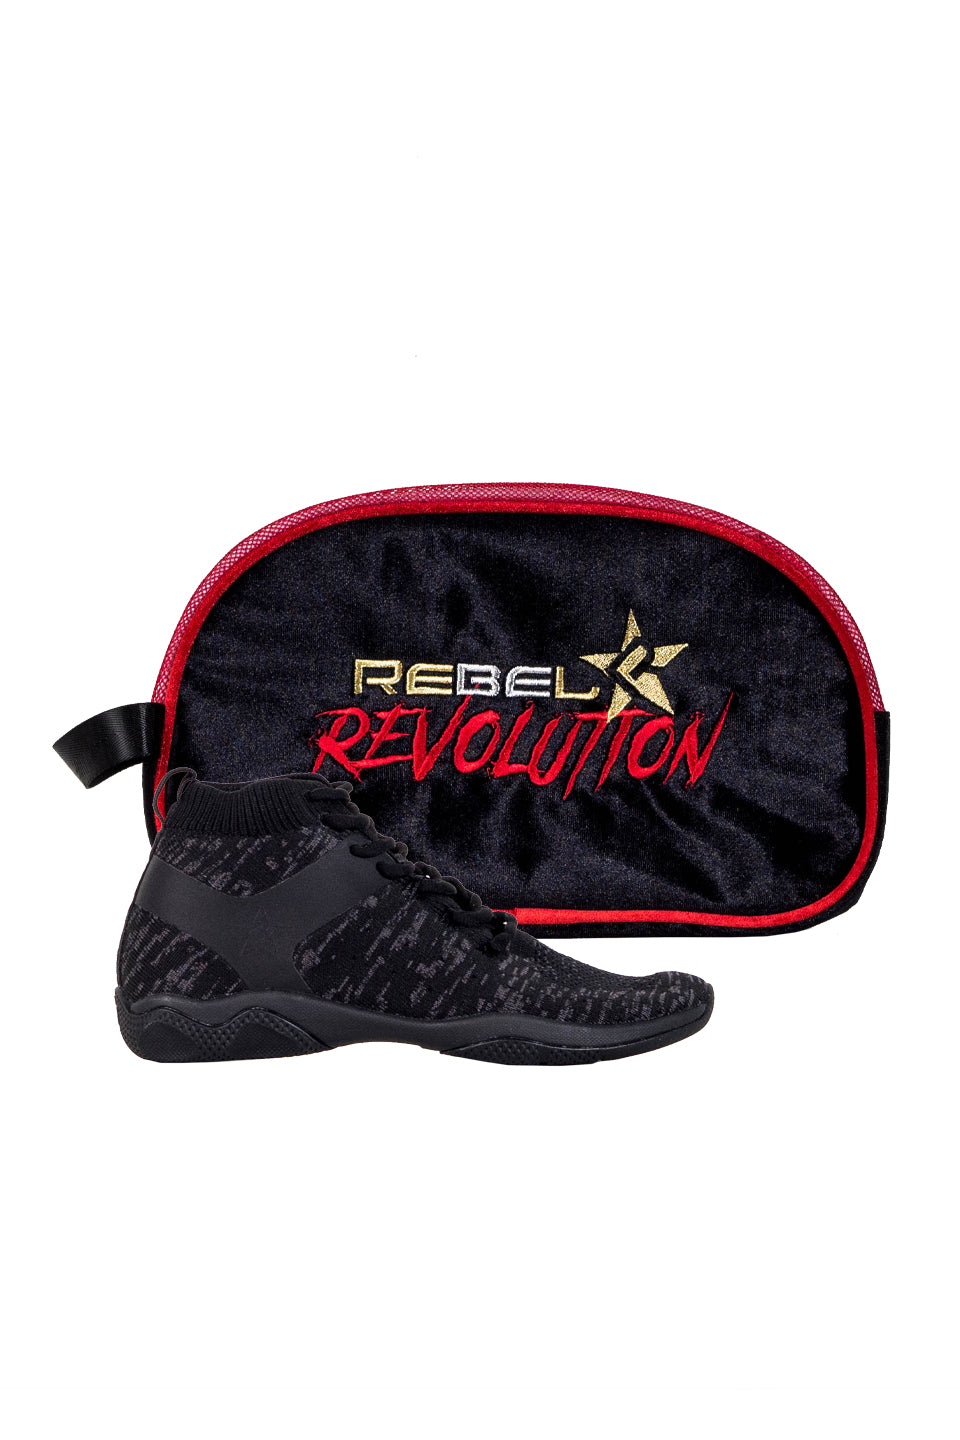  Rebel Athletic Revolt Blackout Cheer Shoe, Blackout, Size 4 :  Sports & Outdoors